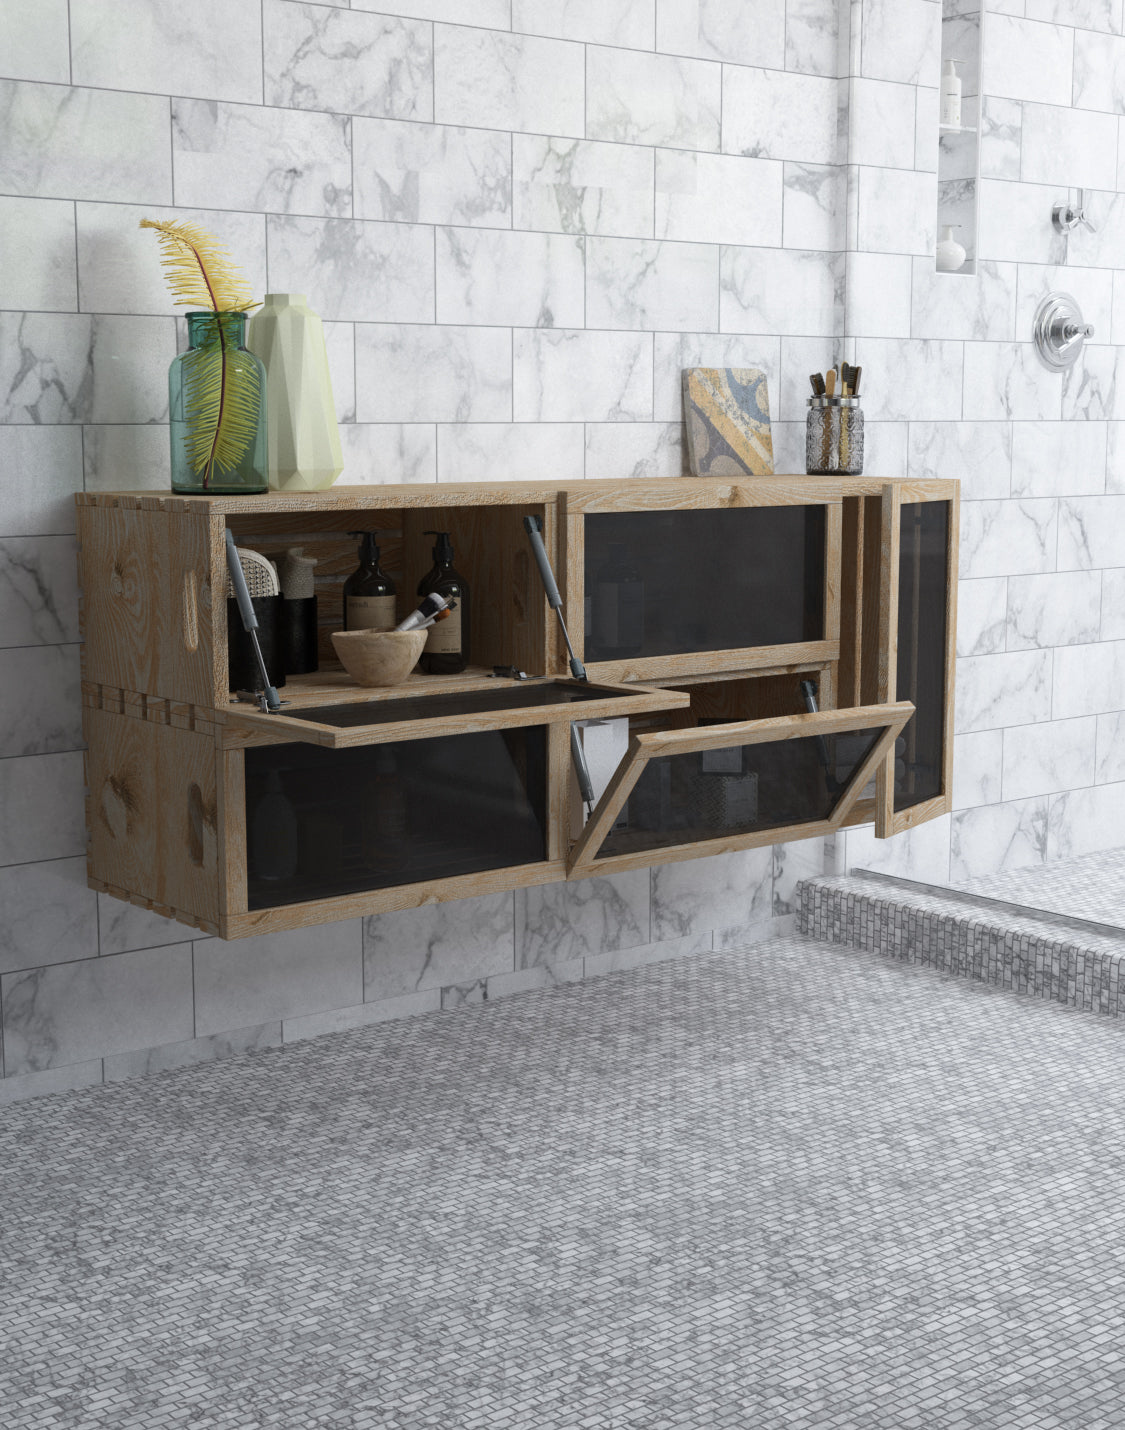 Henri Bathroom Unit Modular And real wood furniture product